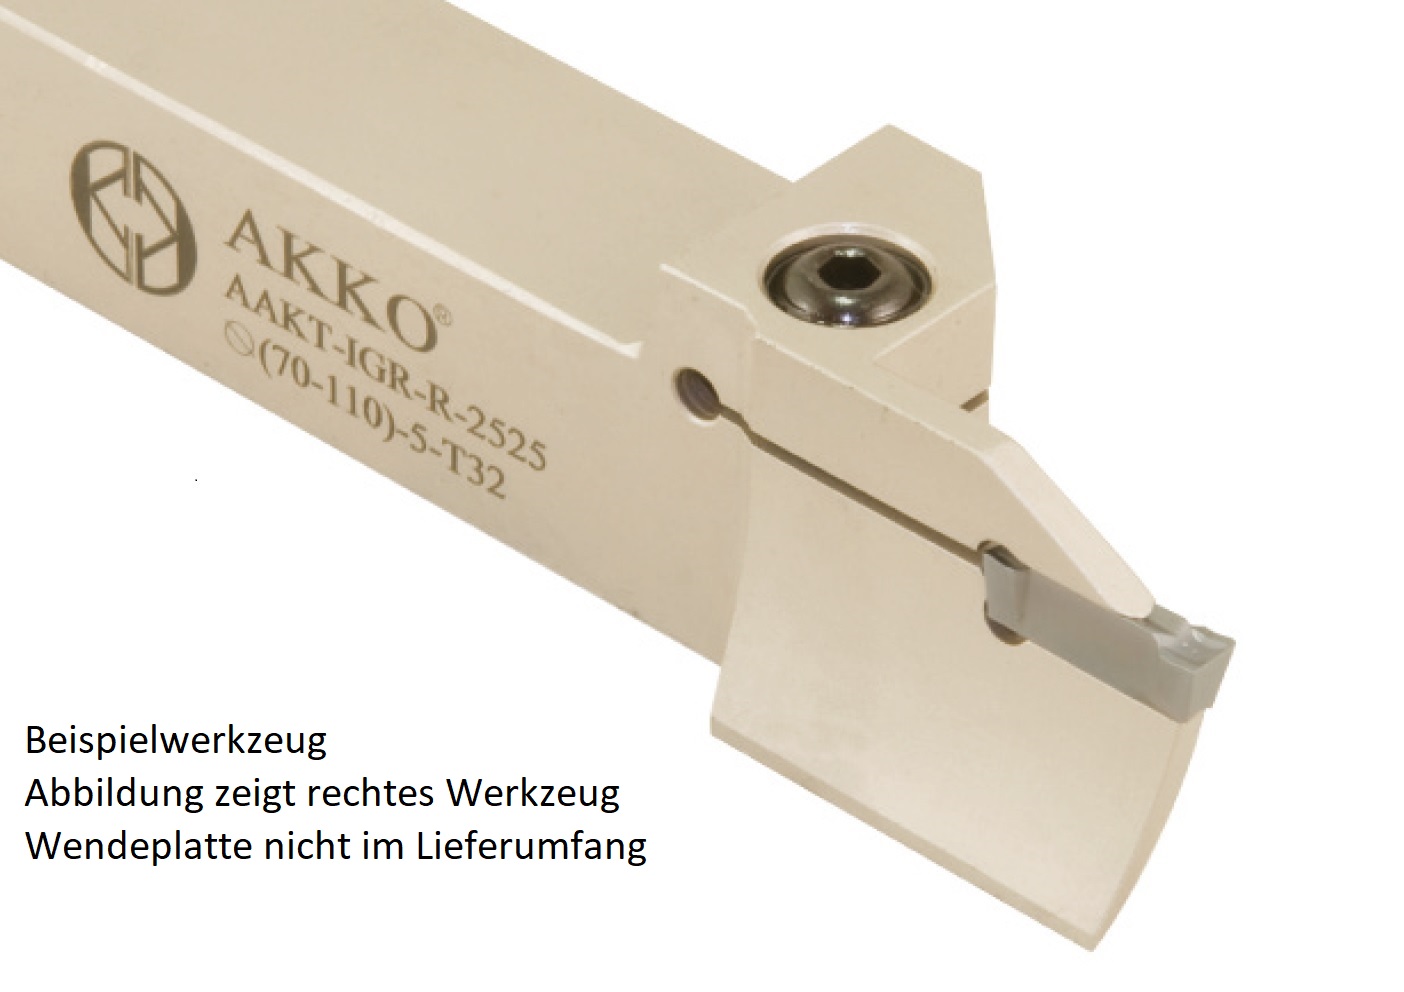 AKKO-Axial-Stechhalter, kompatibel mit Iscar-Stechplatte DGN / GRP-4
Schaft-ø 25x25, Einstechbereich ø 70 - ø 110 mm, rechts